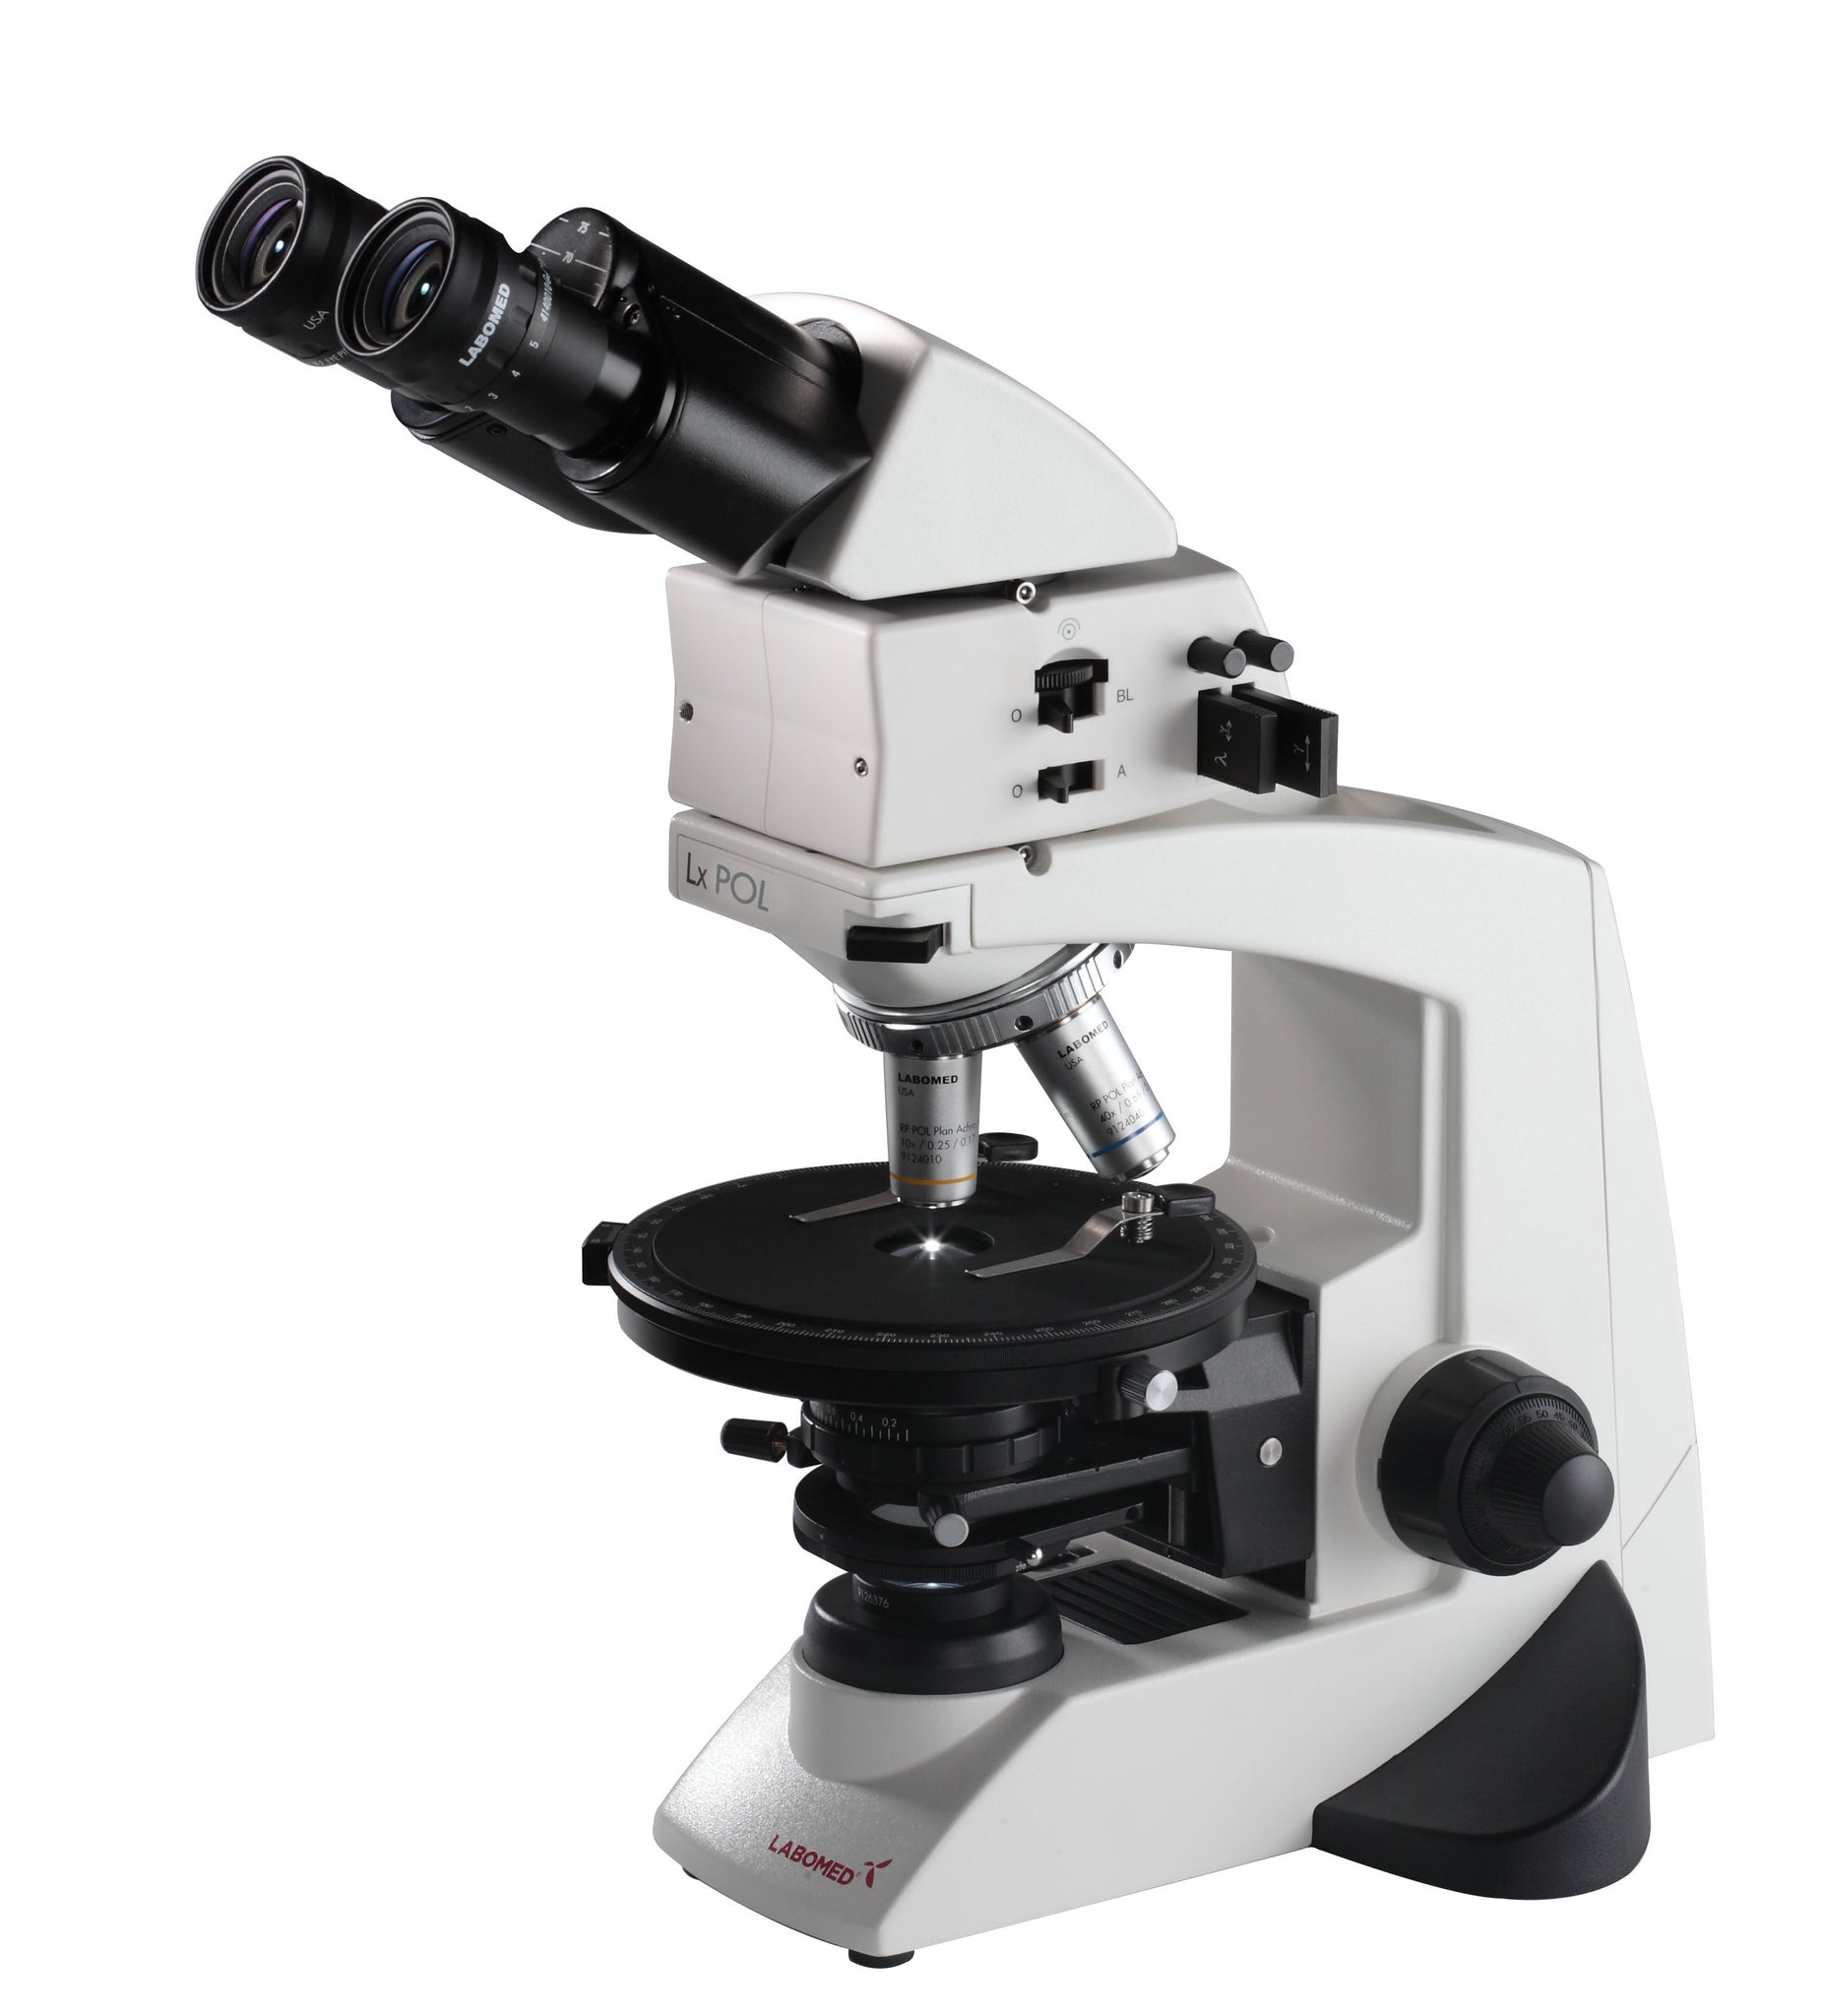 Labomed Lx Pol Polarizing Microscope